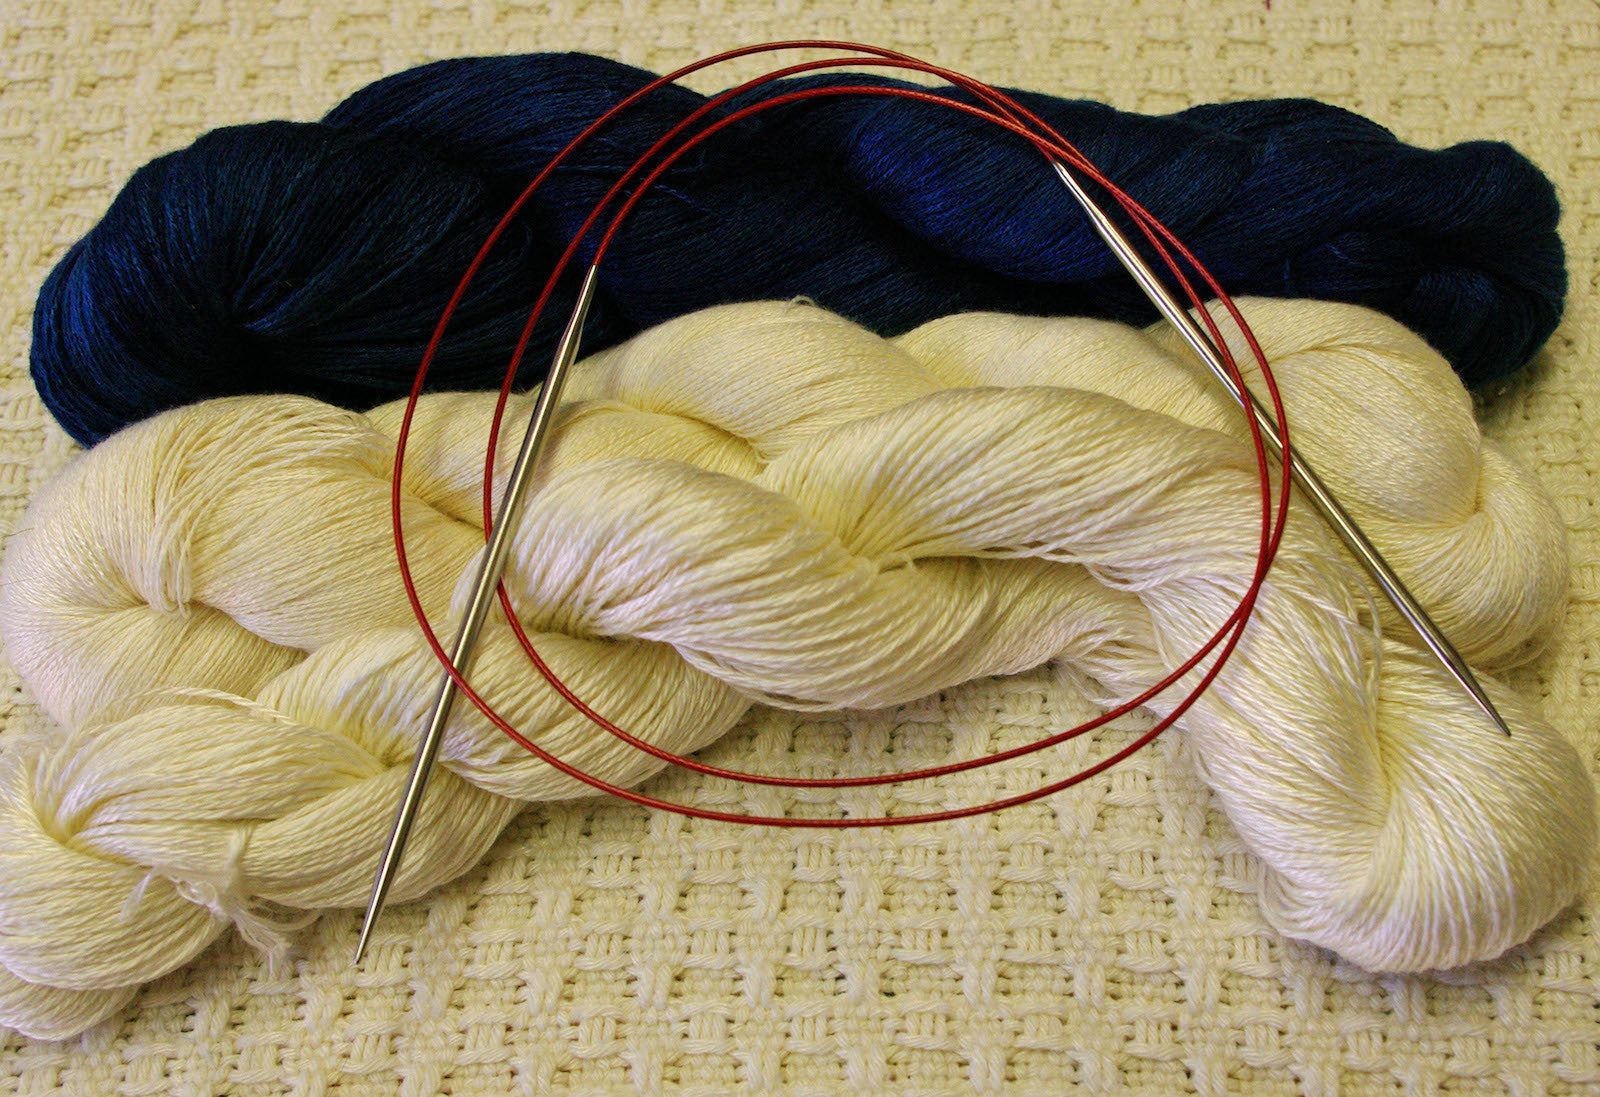 9 Inch ChiaoGoo RED Nylon Cord Circular Knitting Needles